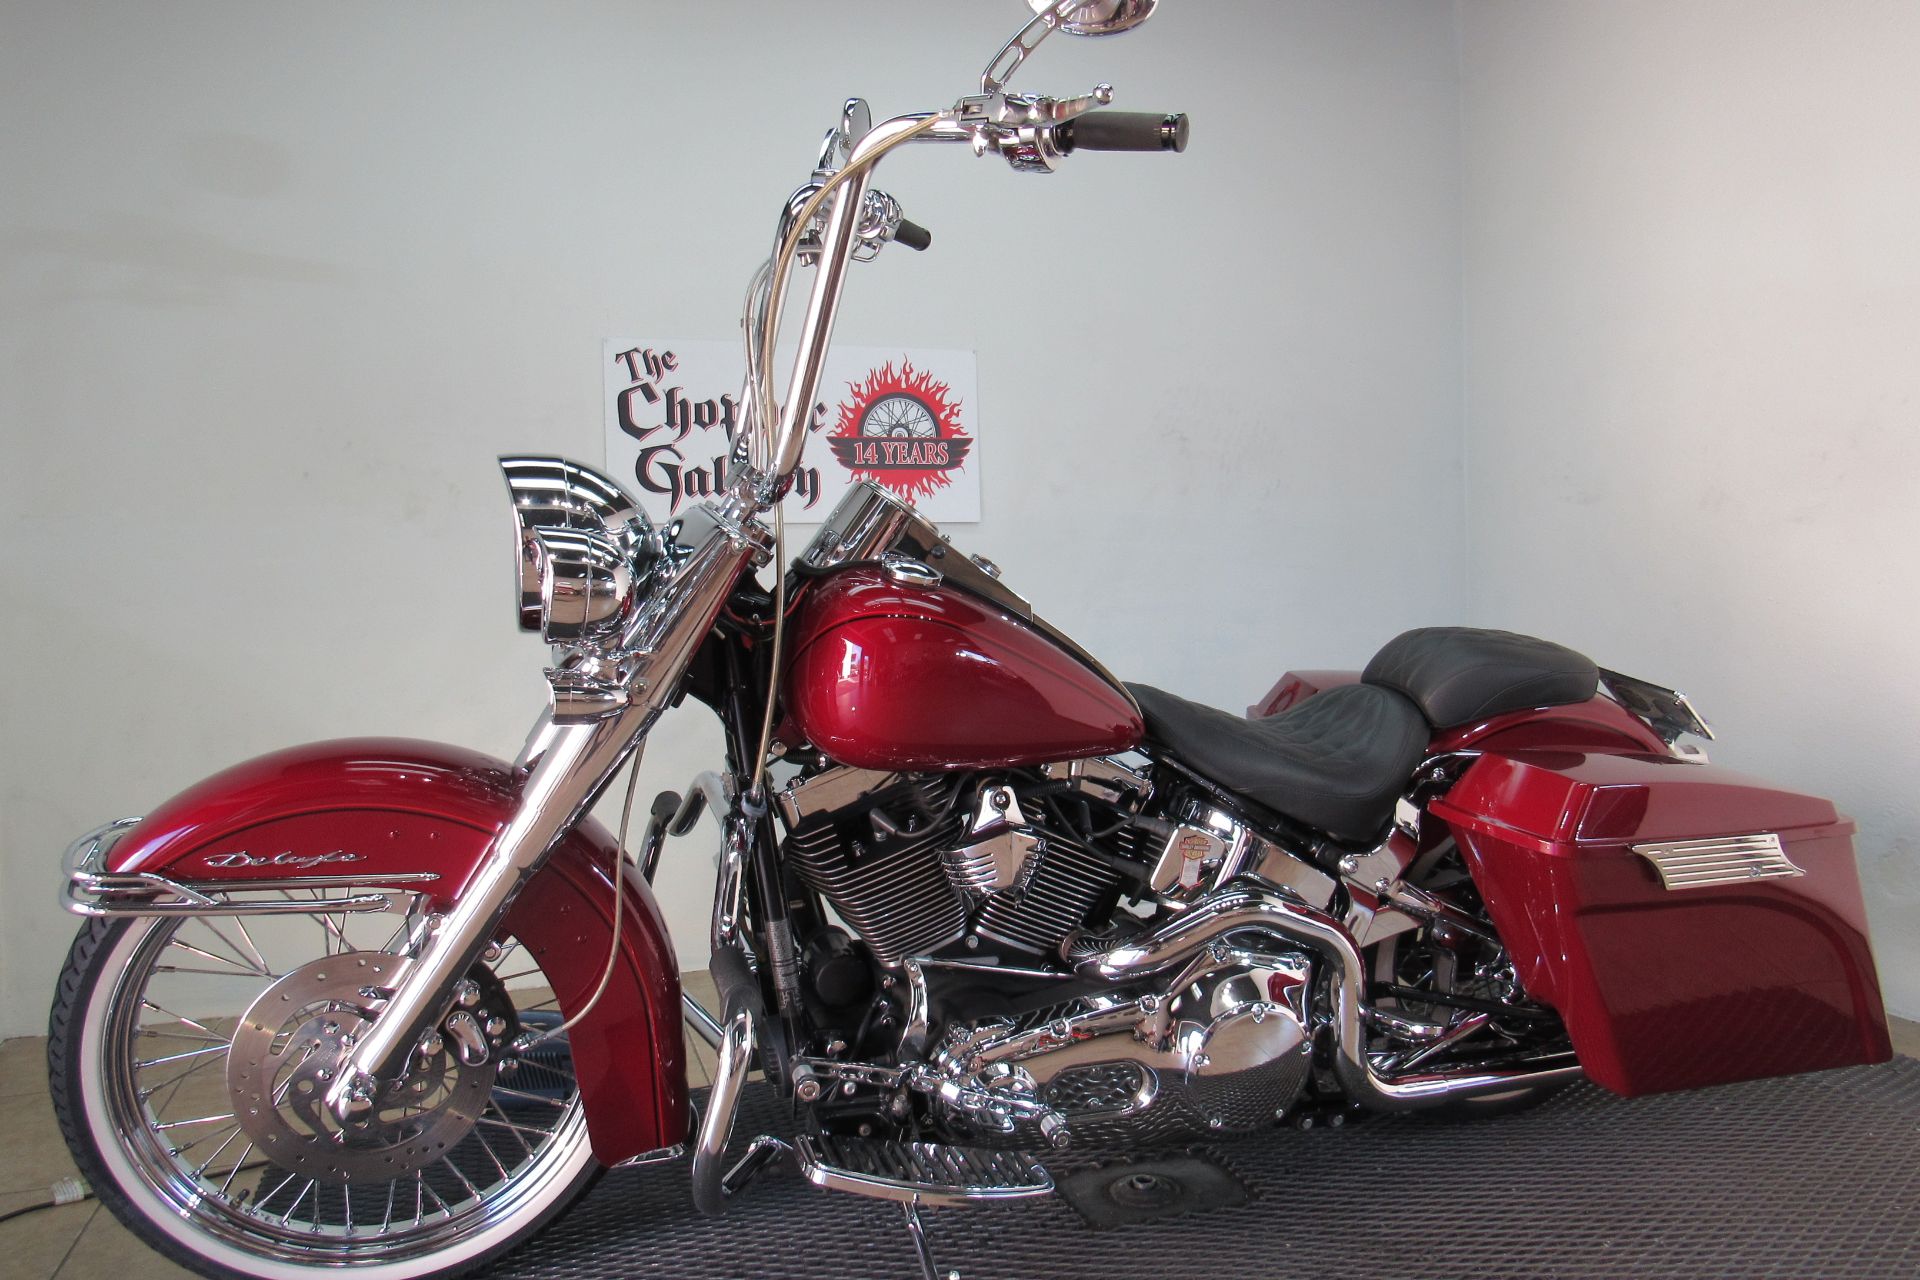 2006 Harley-Davidson Softail® Deluxe in Temecula, California - Photo 4